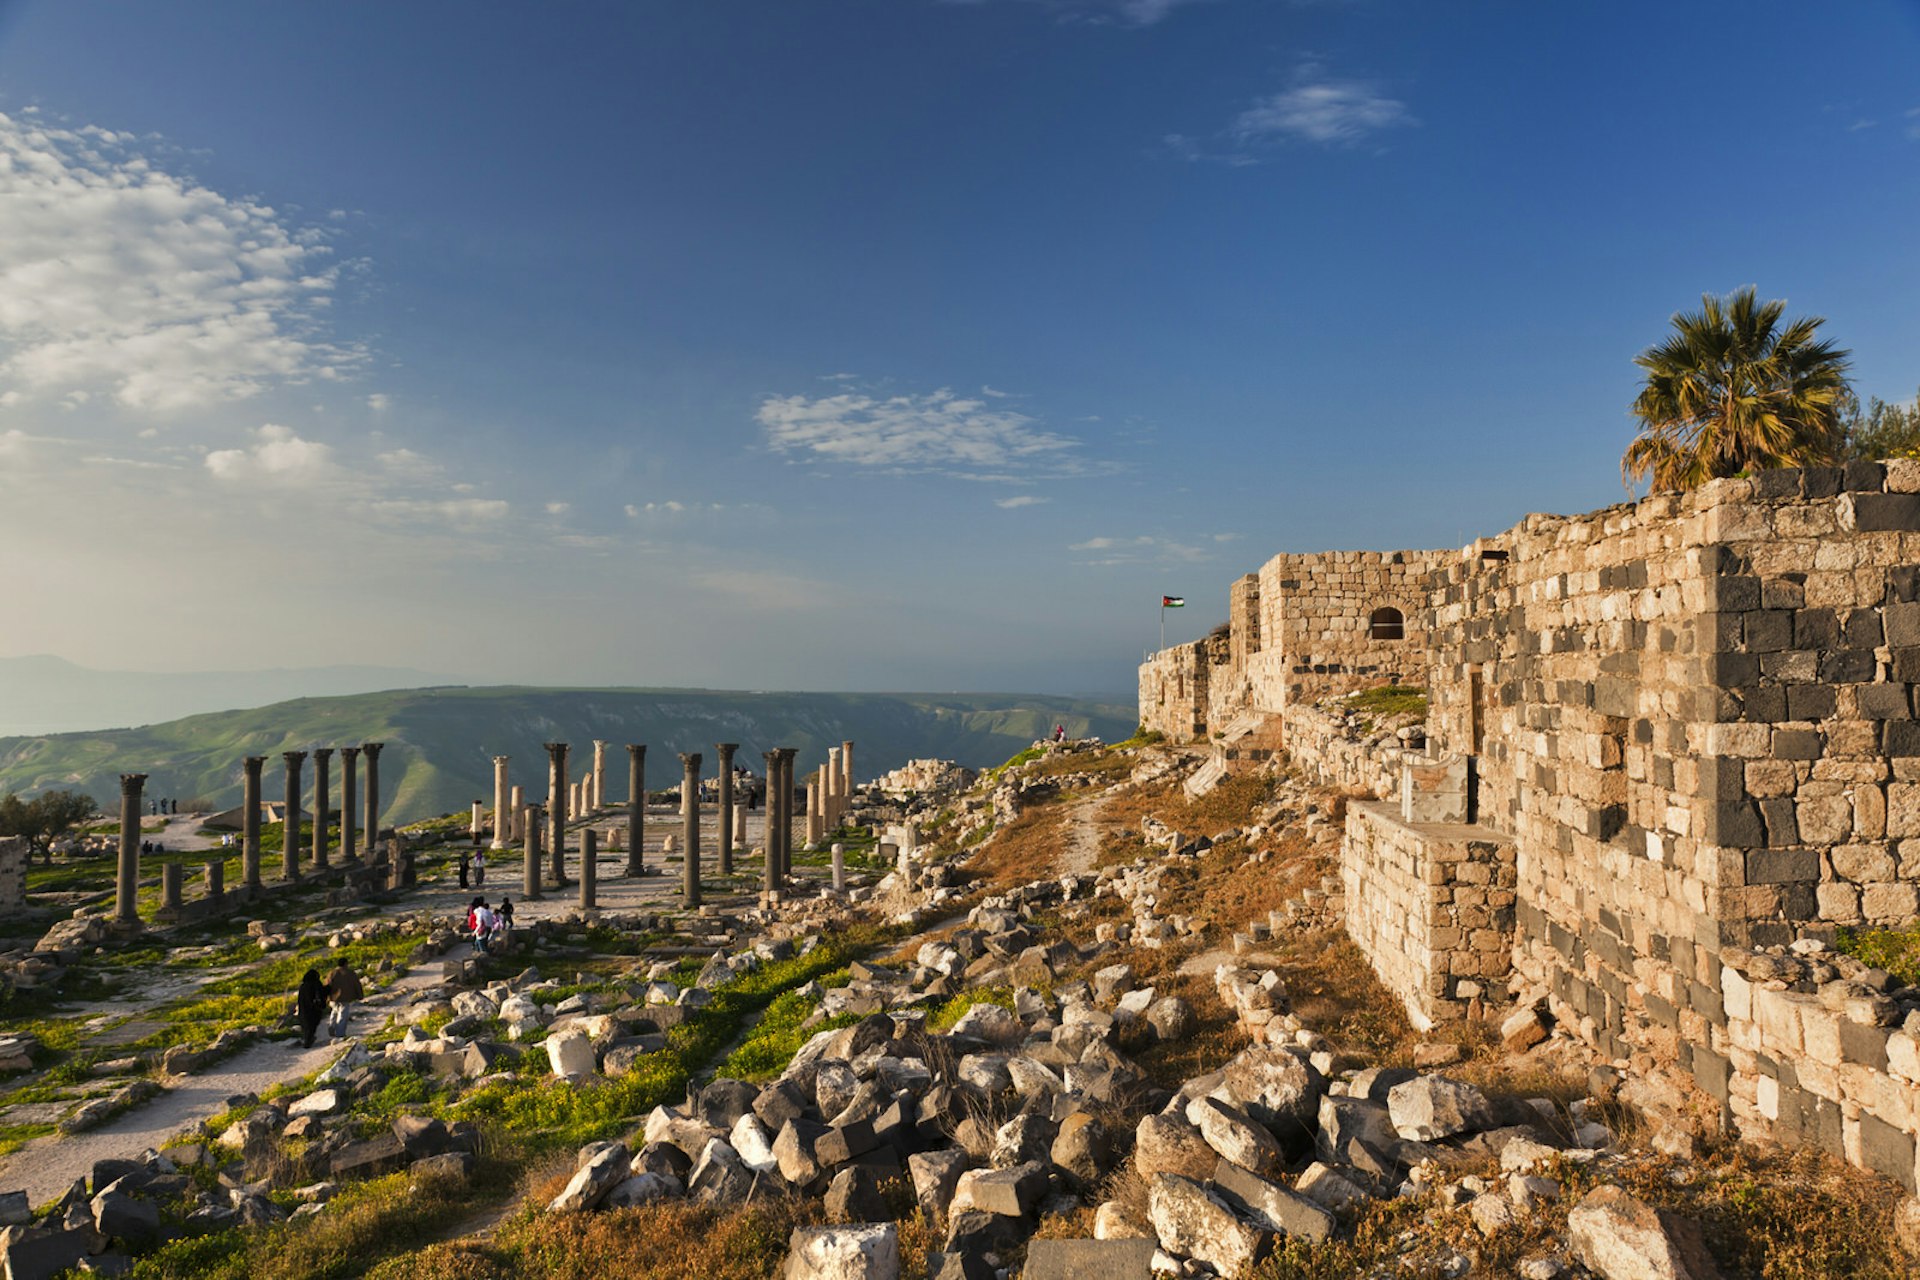 Ruins of the ancient city of Garada, Umm Qais, Jordan © Walter Bibikow / Getty Images